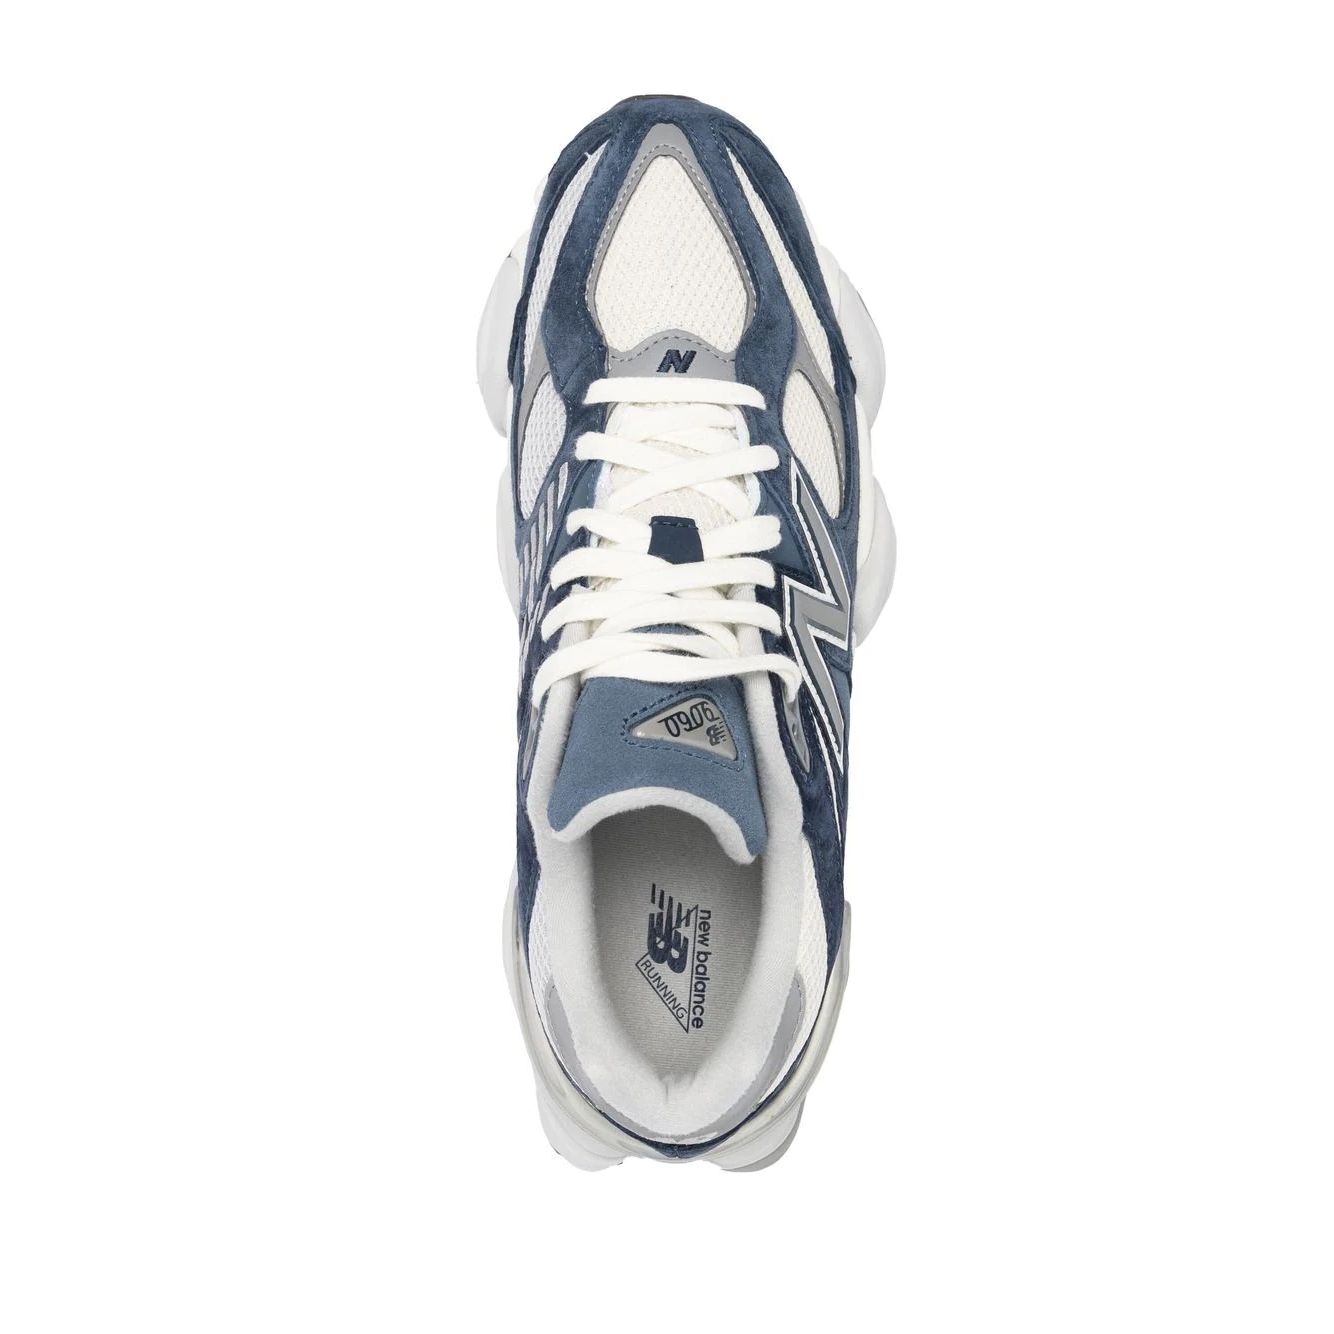 New Balance 9060 low-top sneakers - Blau